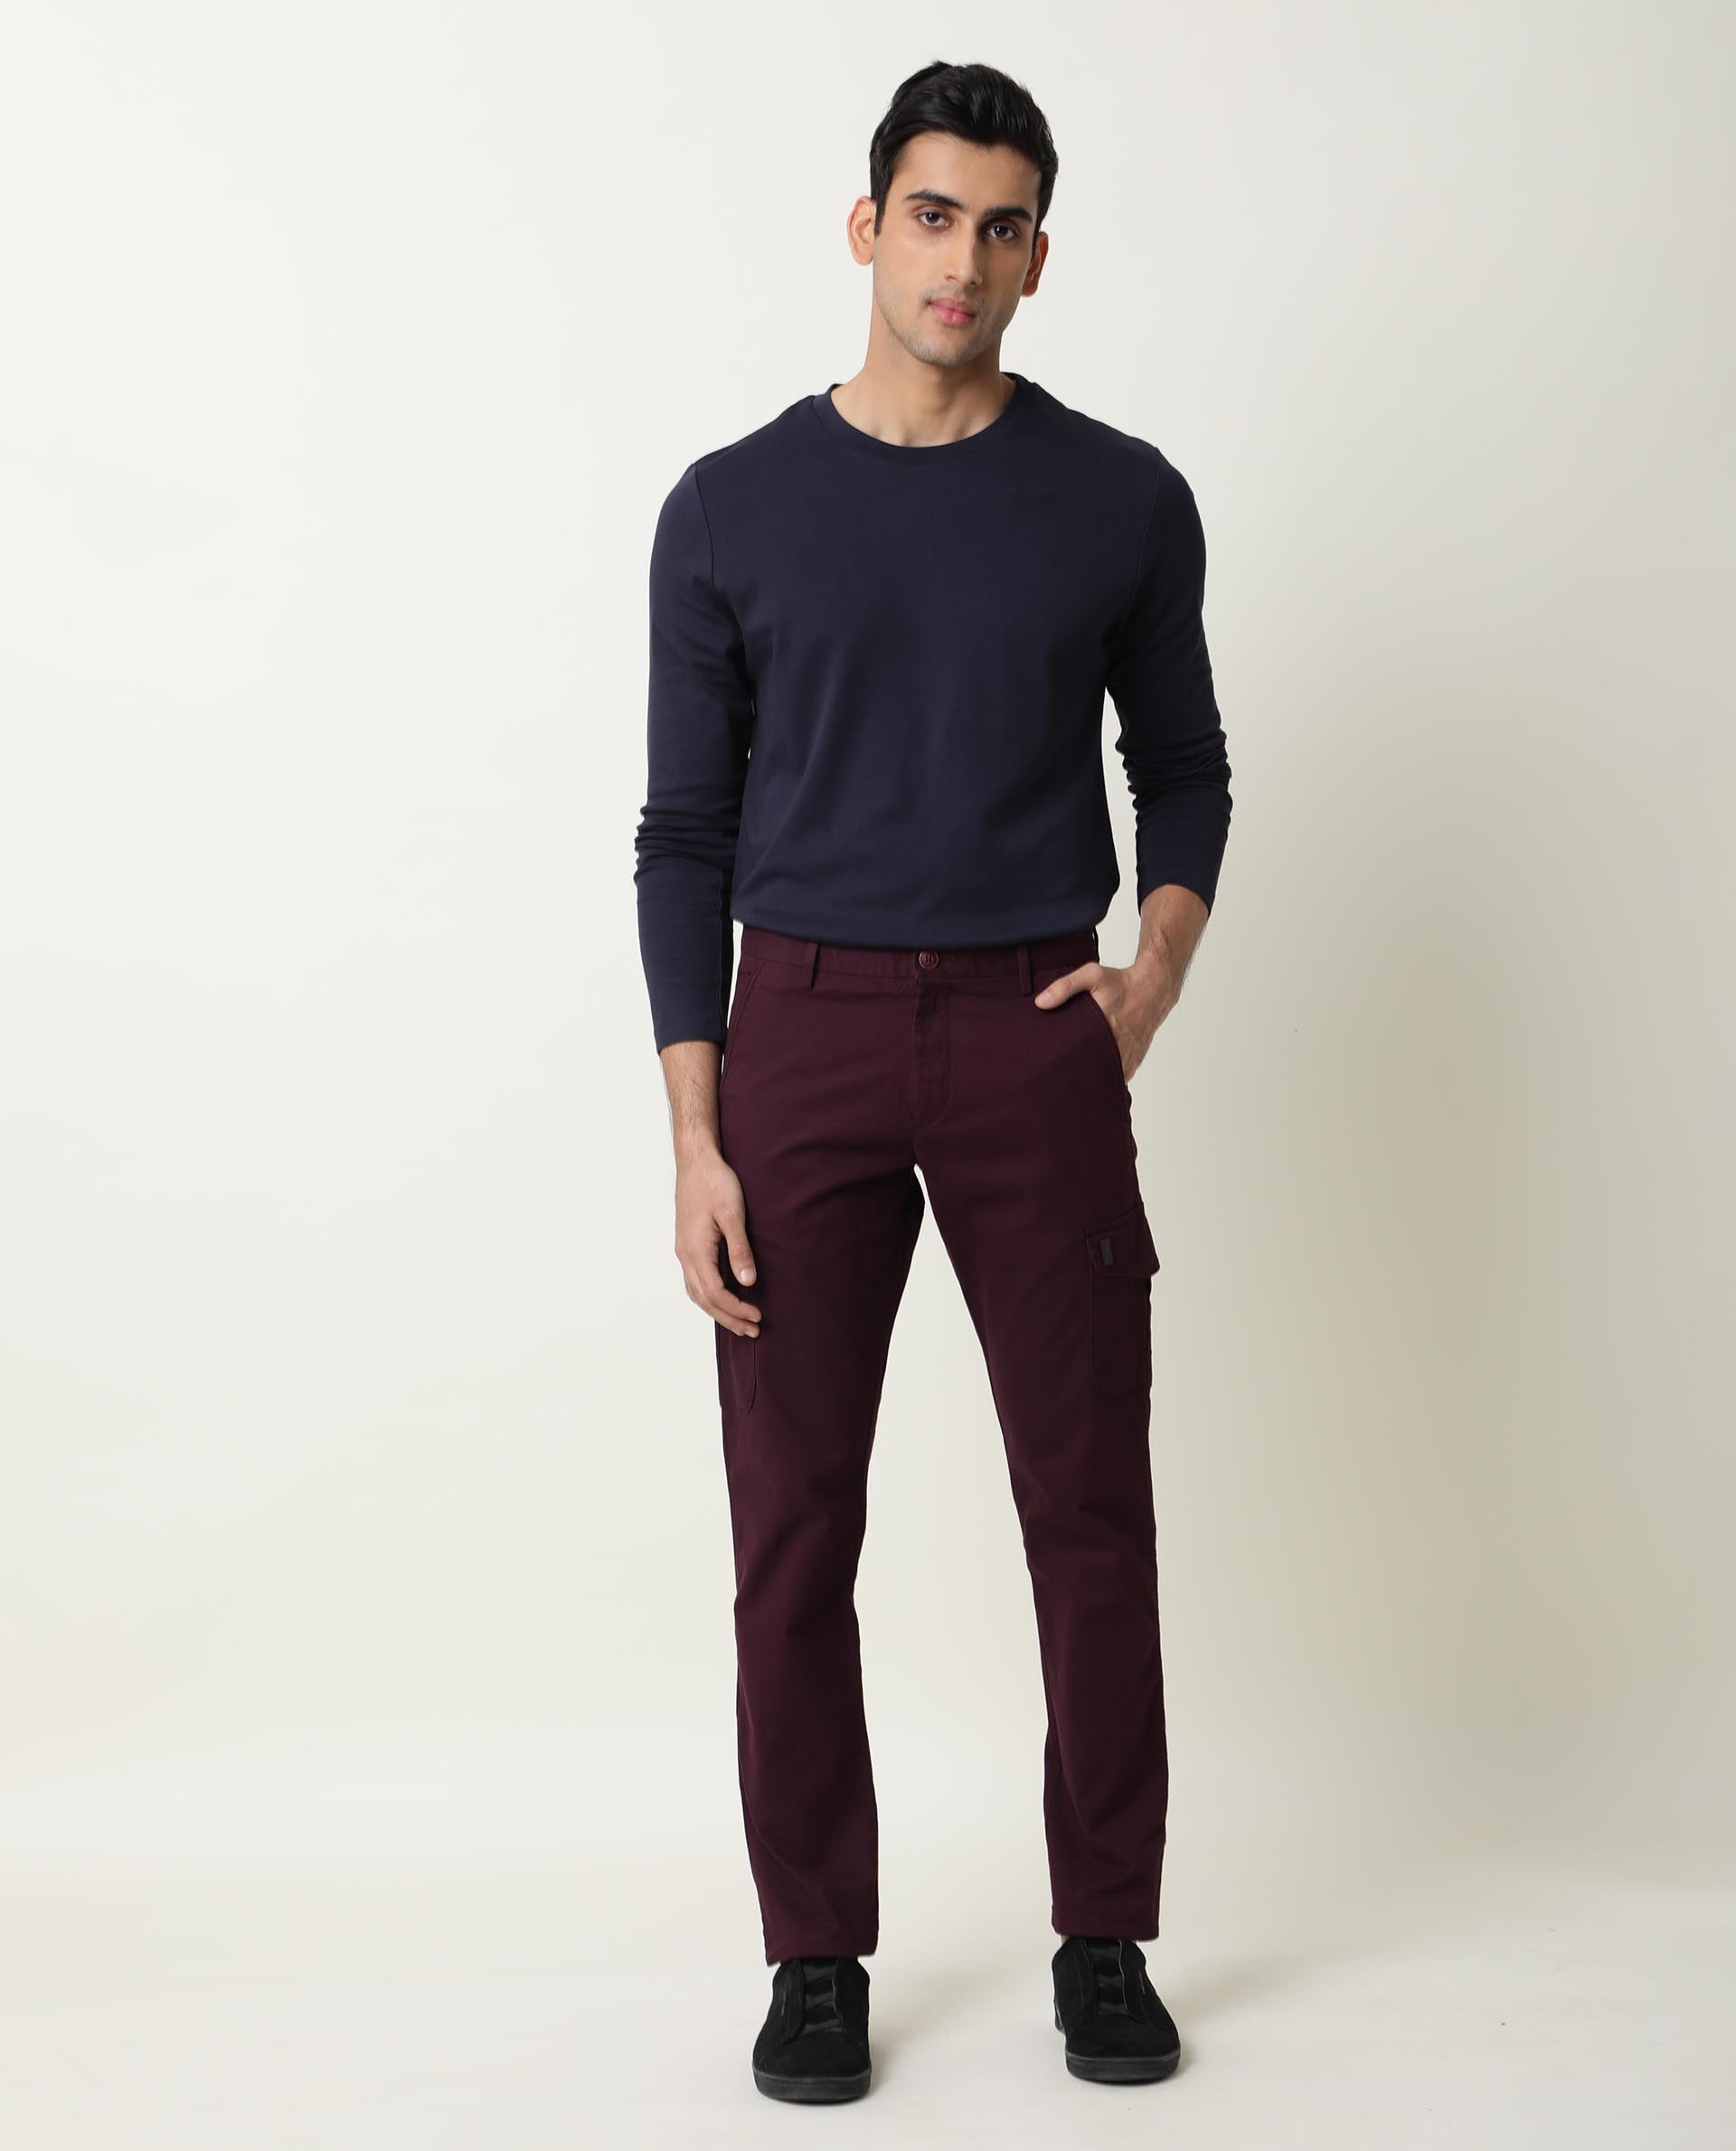 27 Best Burgundy pants men ideas  burgundy pants burgundy pants men mens  outfits